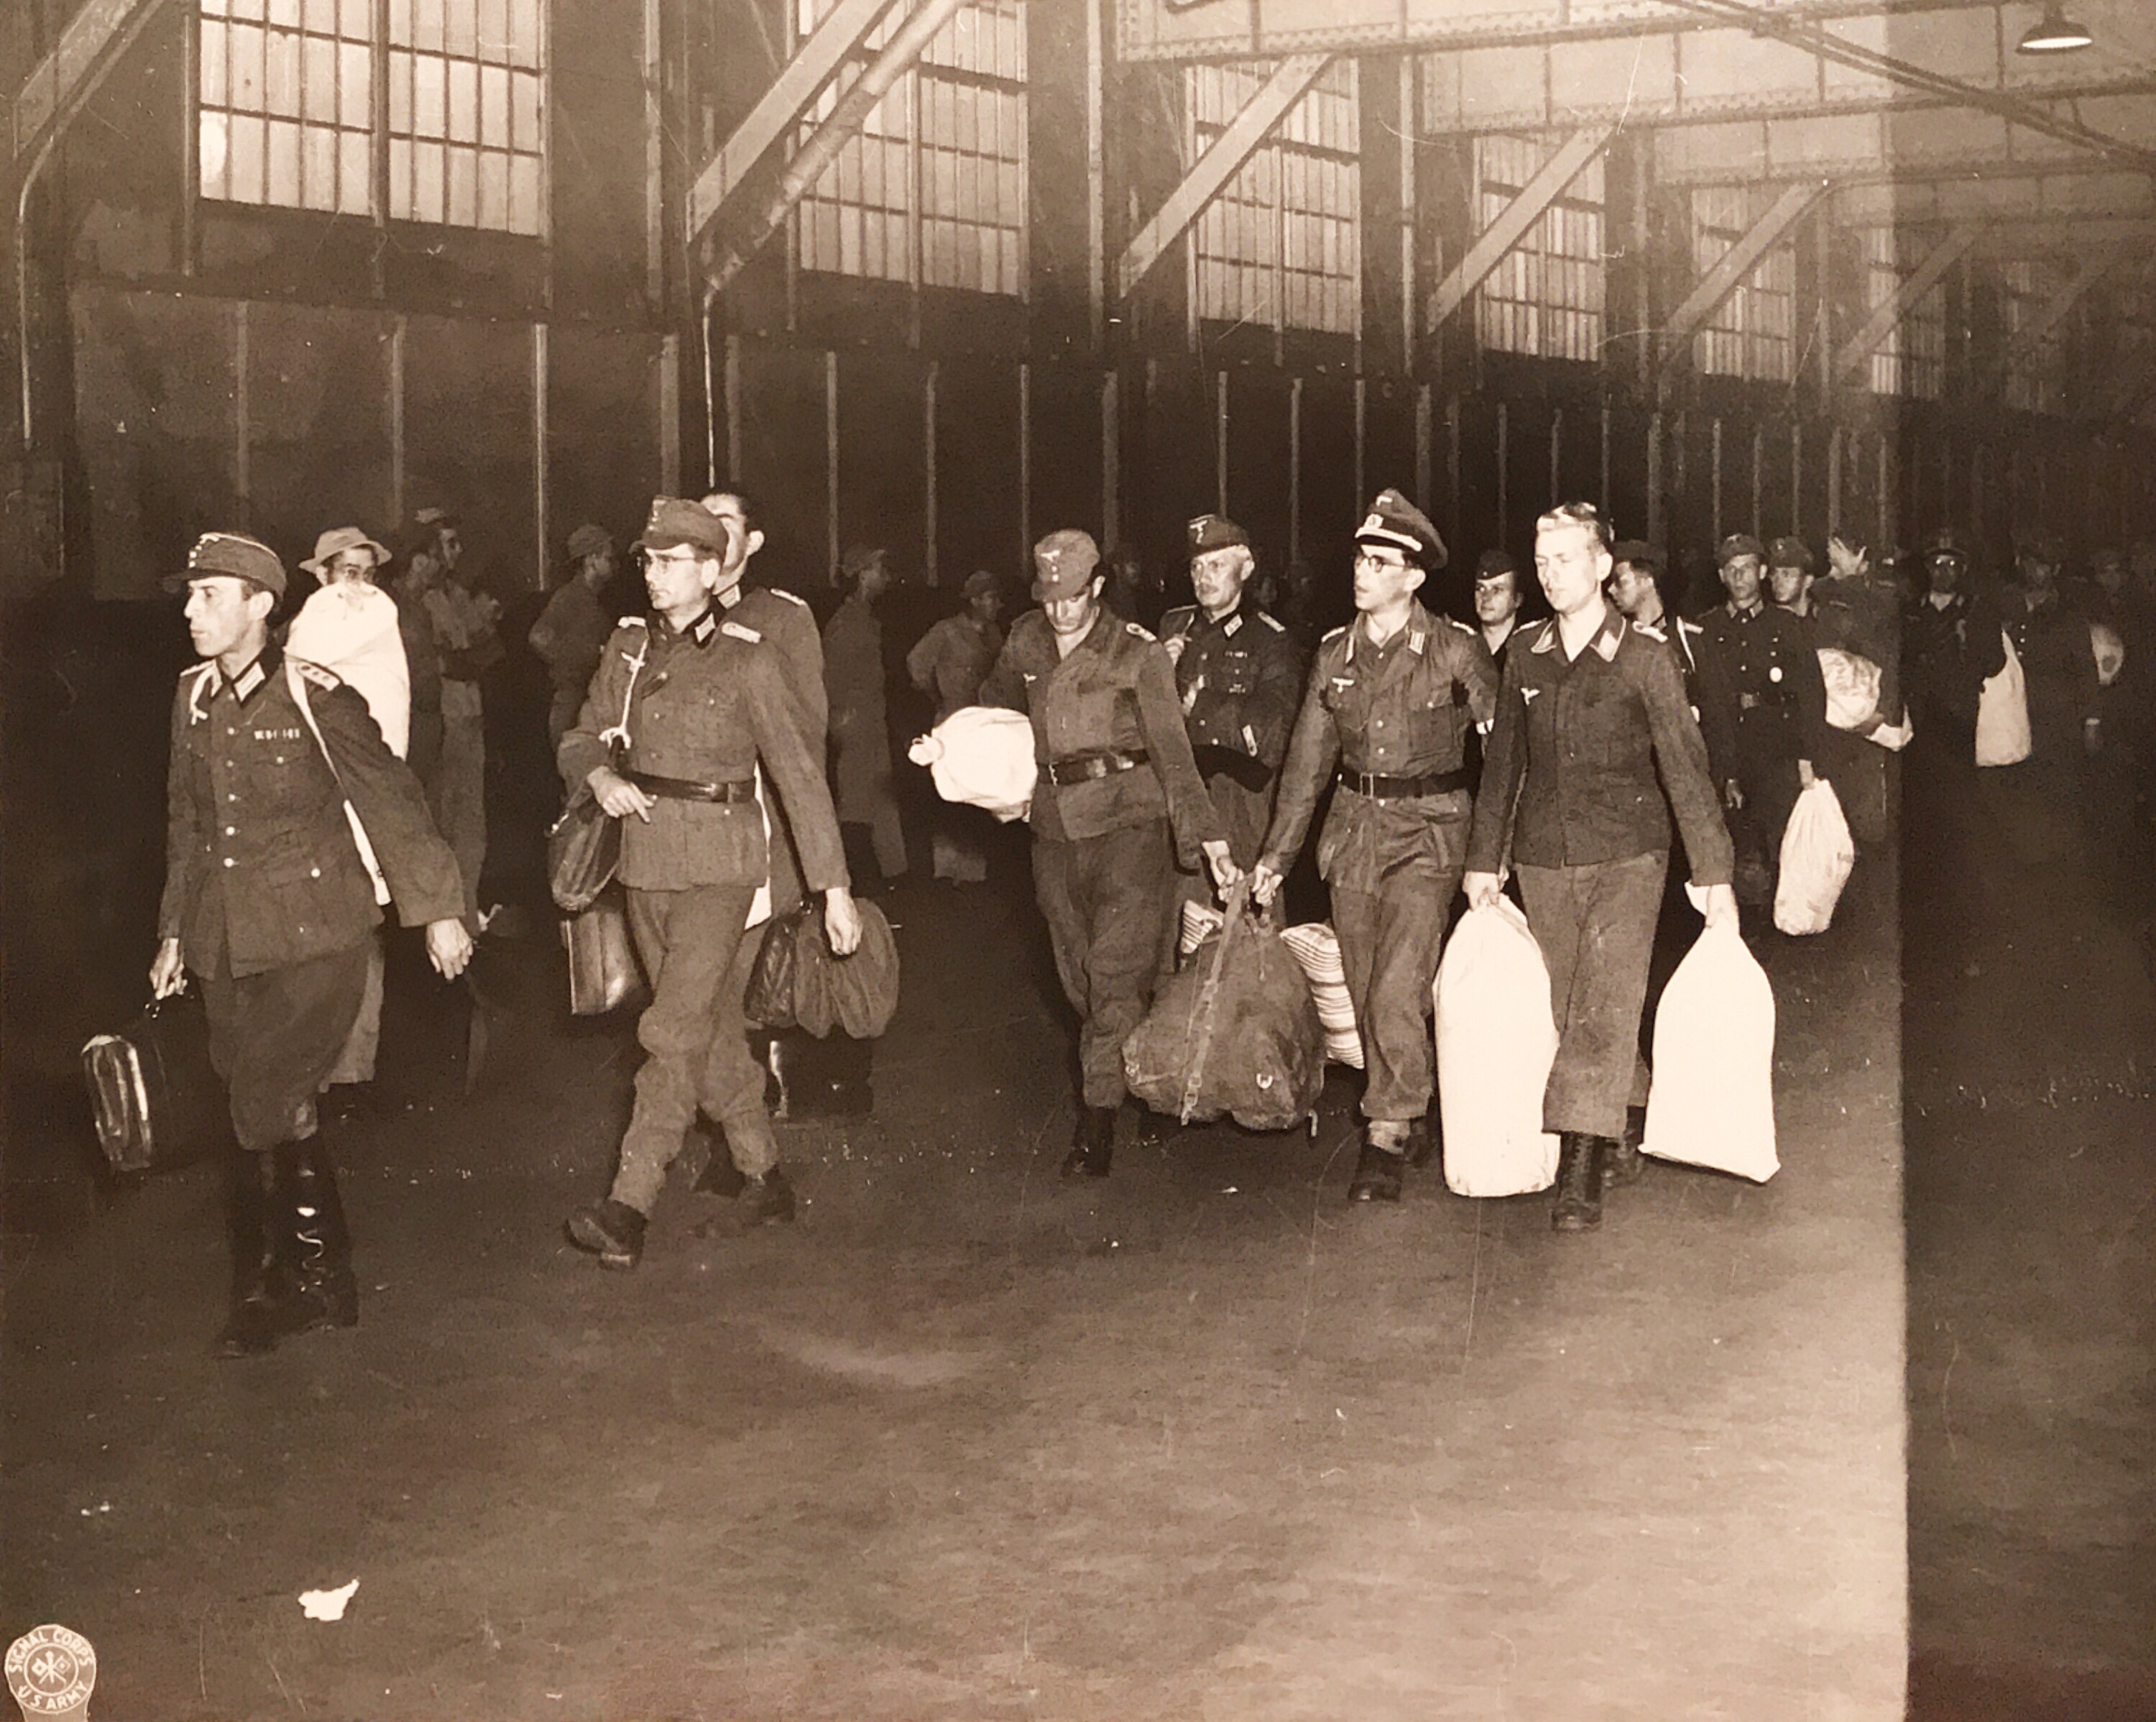 Men in Nazi uniforms carrying duffel bags walk along an indoor pier.